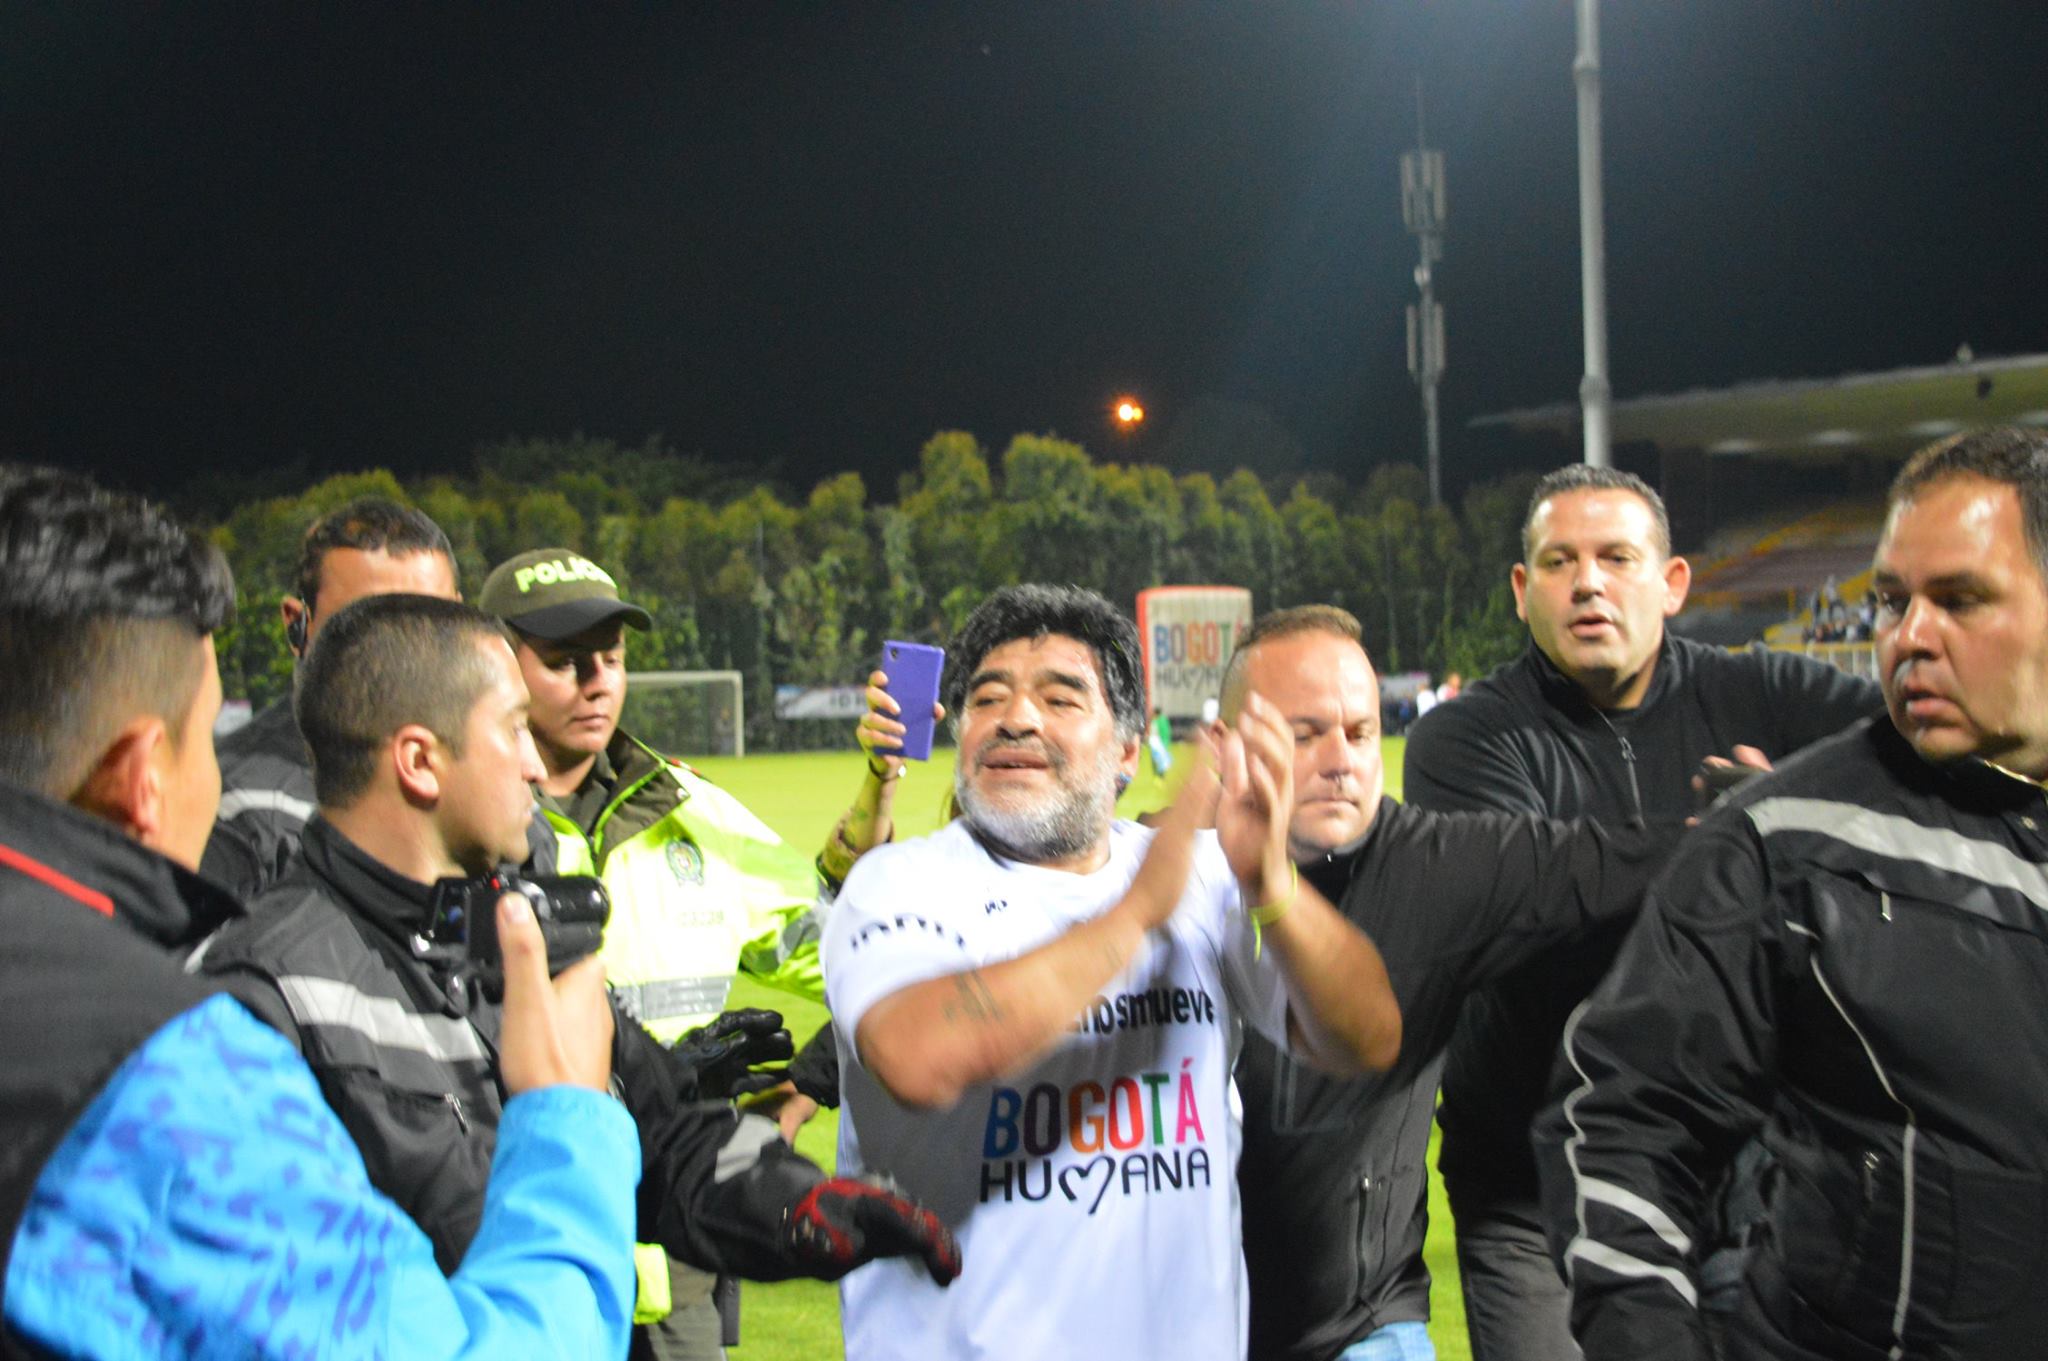 Diego Maradona strutting his stuff recently in Bogotá, Colombia.